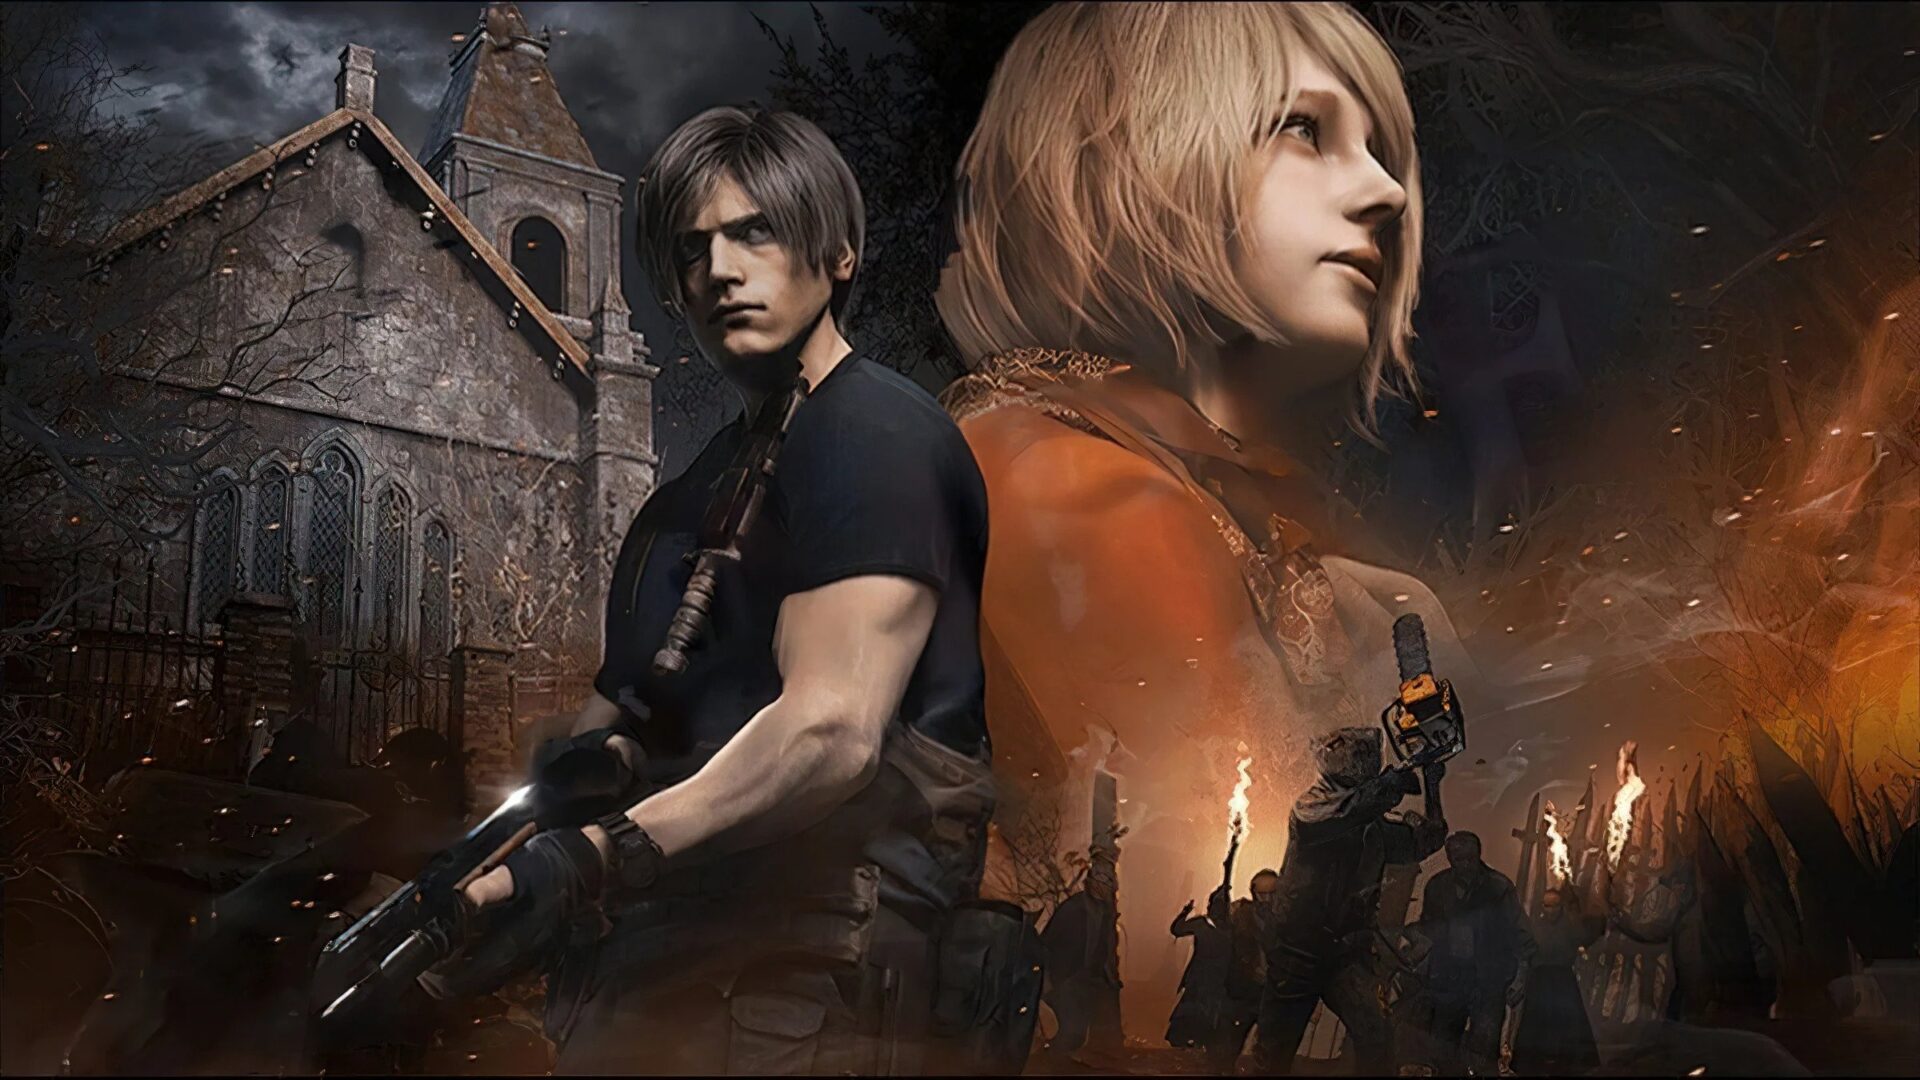 Resident Evil 4 - PlayStation 5 